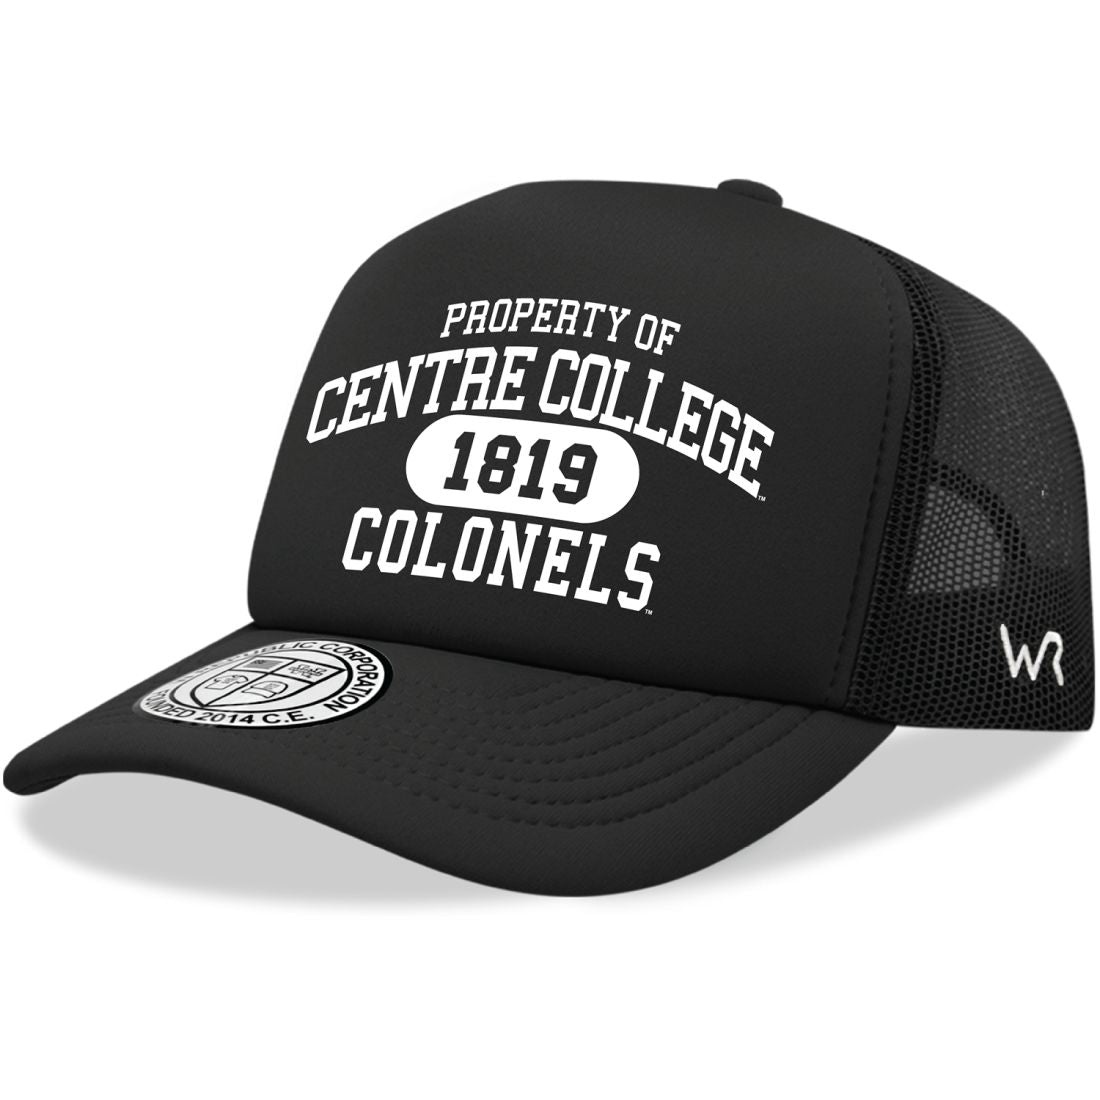 Centre College Colonels Property Foam Trucker Hats